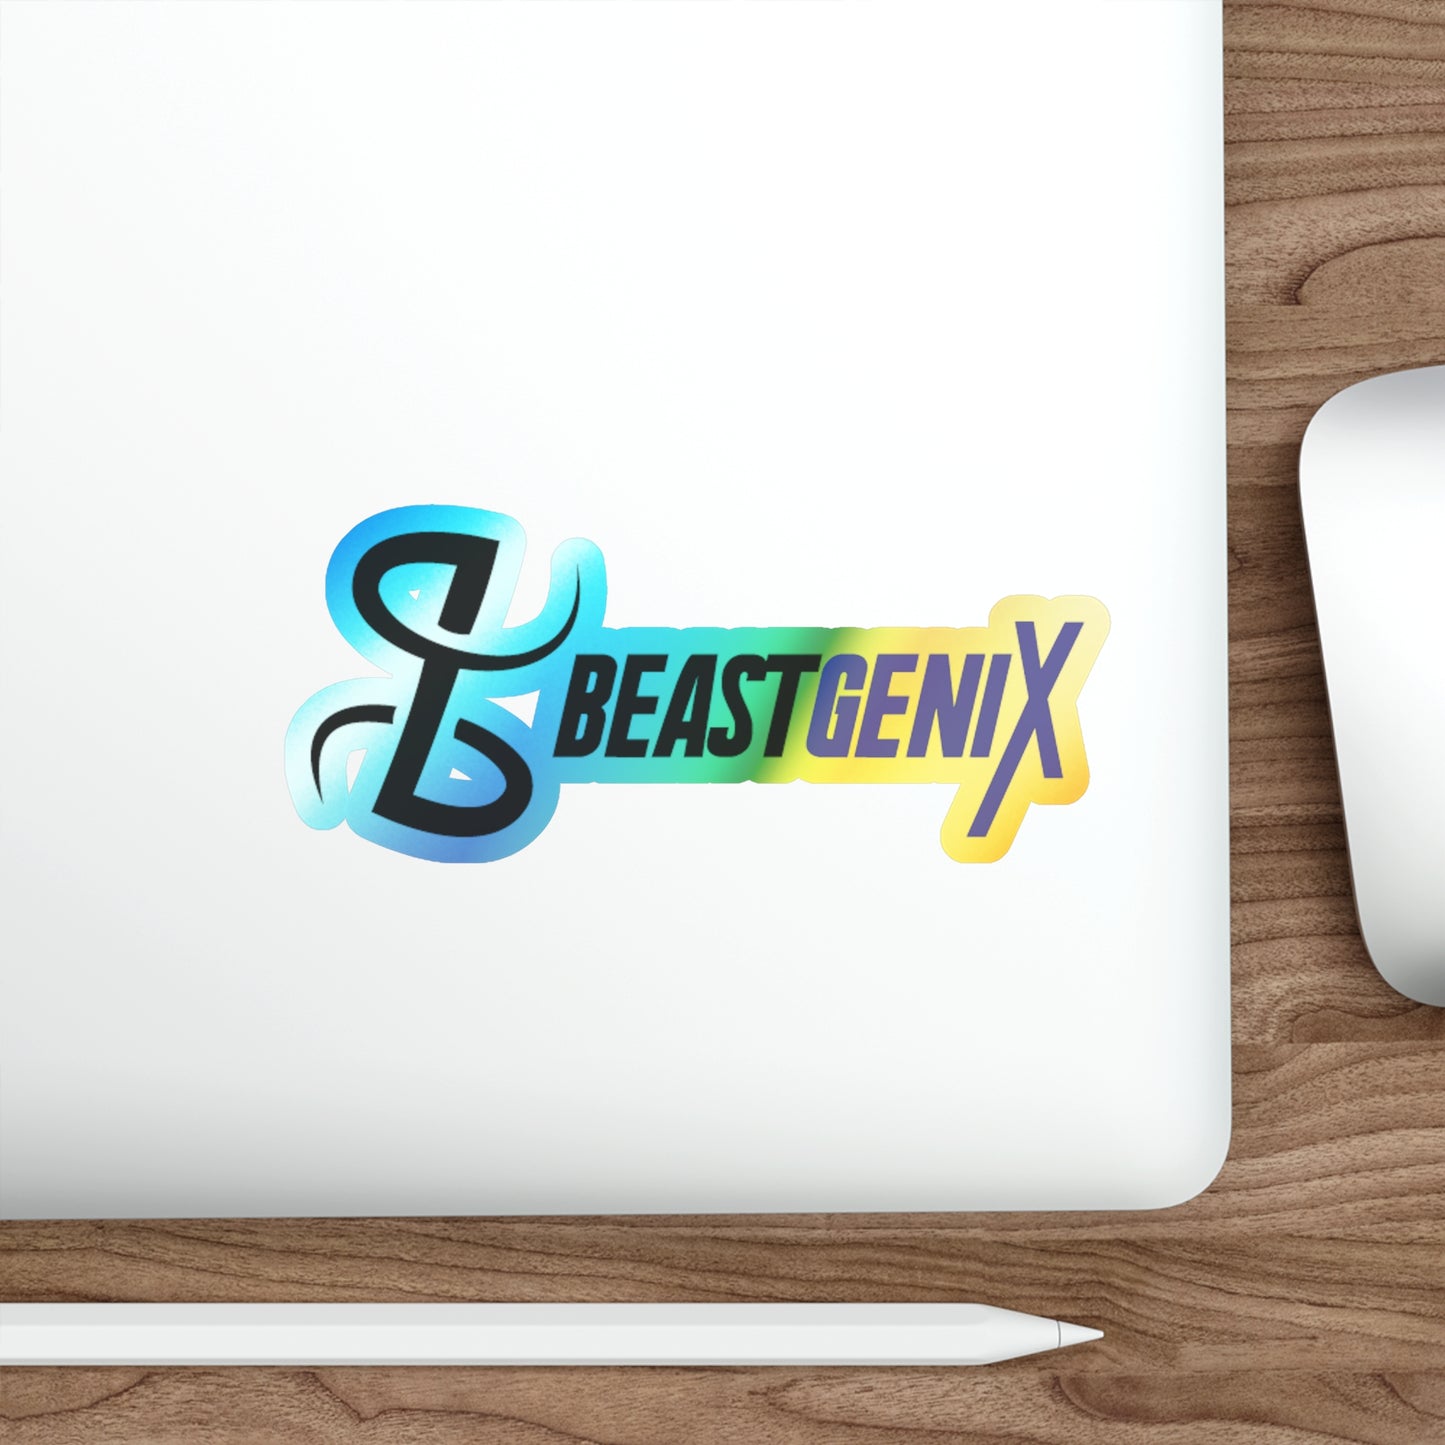 BeastgeniX Holographic Die-cut Stickers